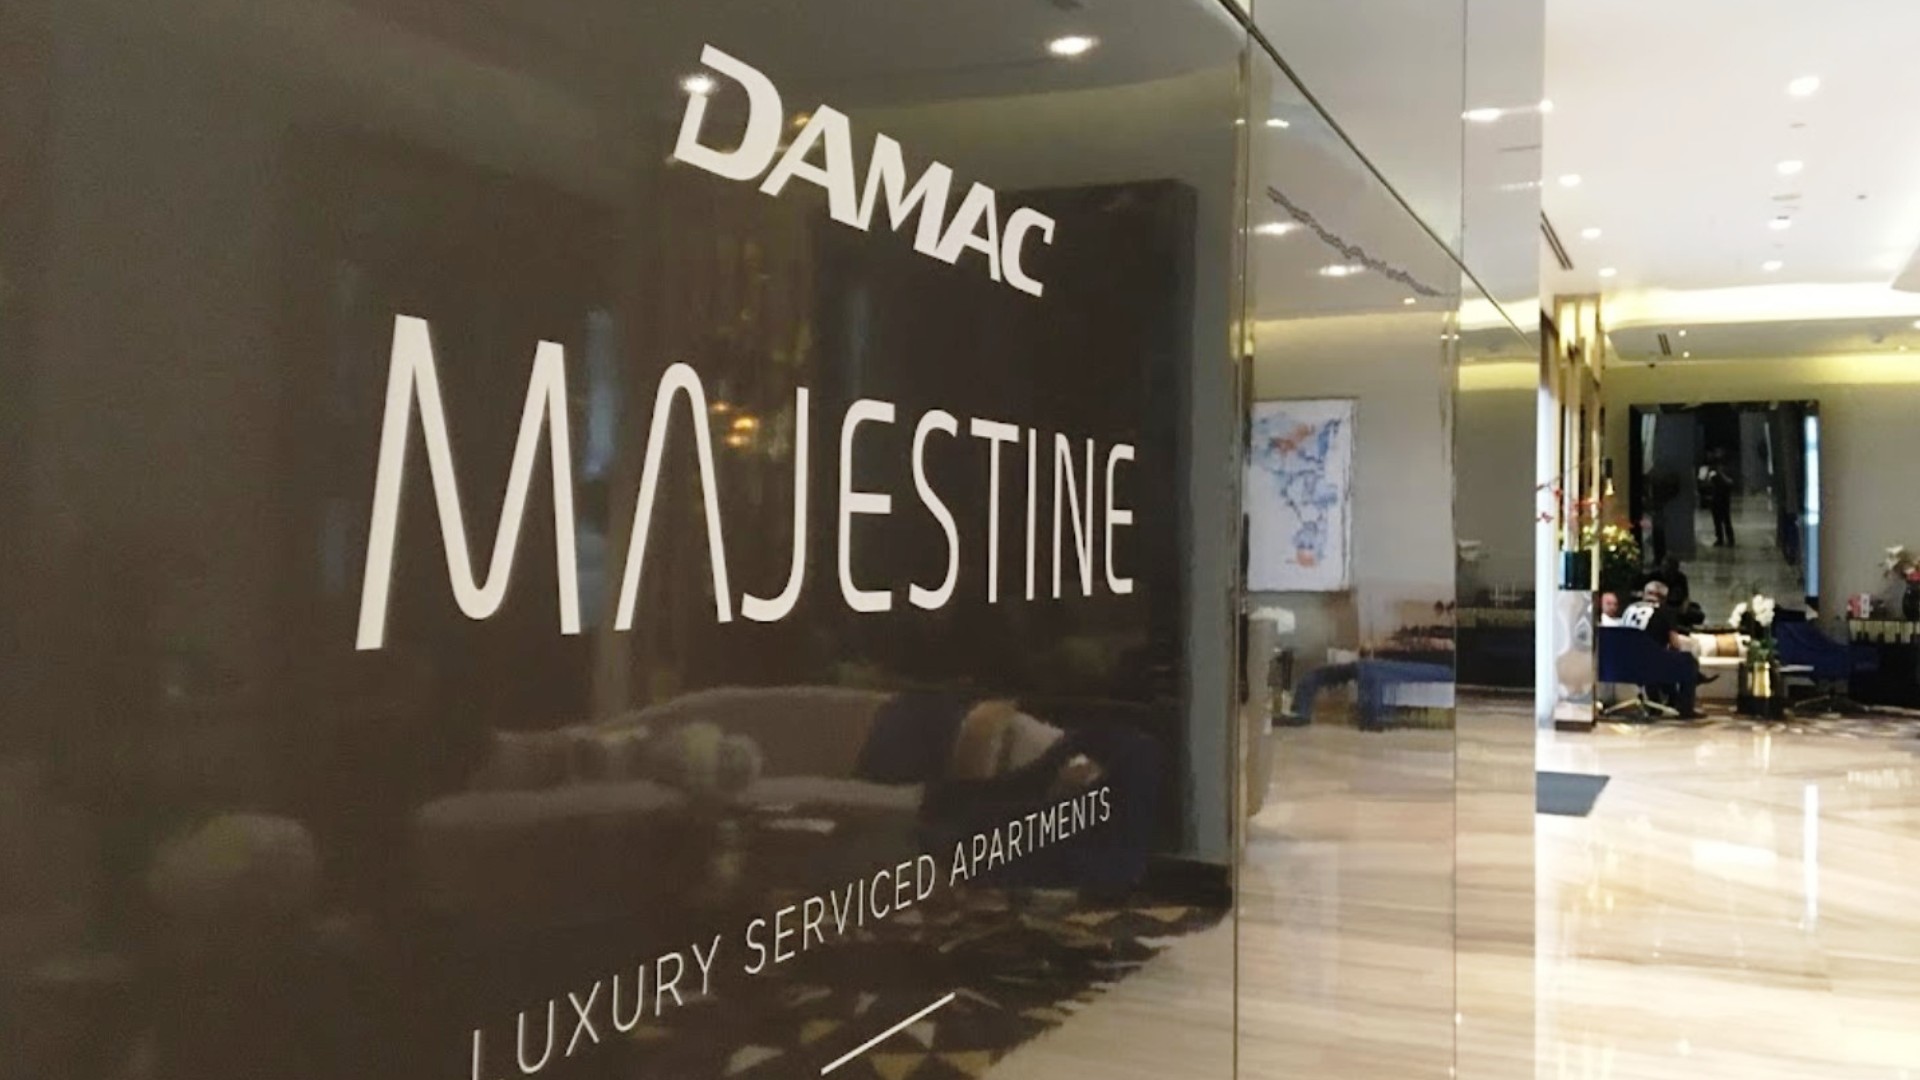 DAMAC MAISON MAJESTINE от Damac Properties в Downtown Dubai, Dubai, ОАЭ - 7